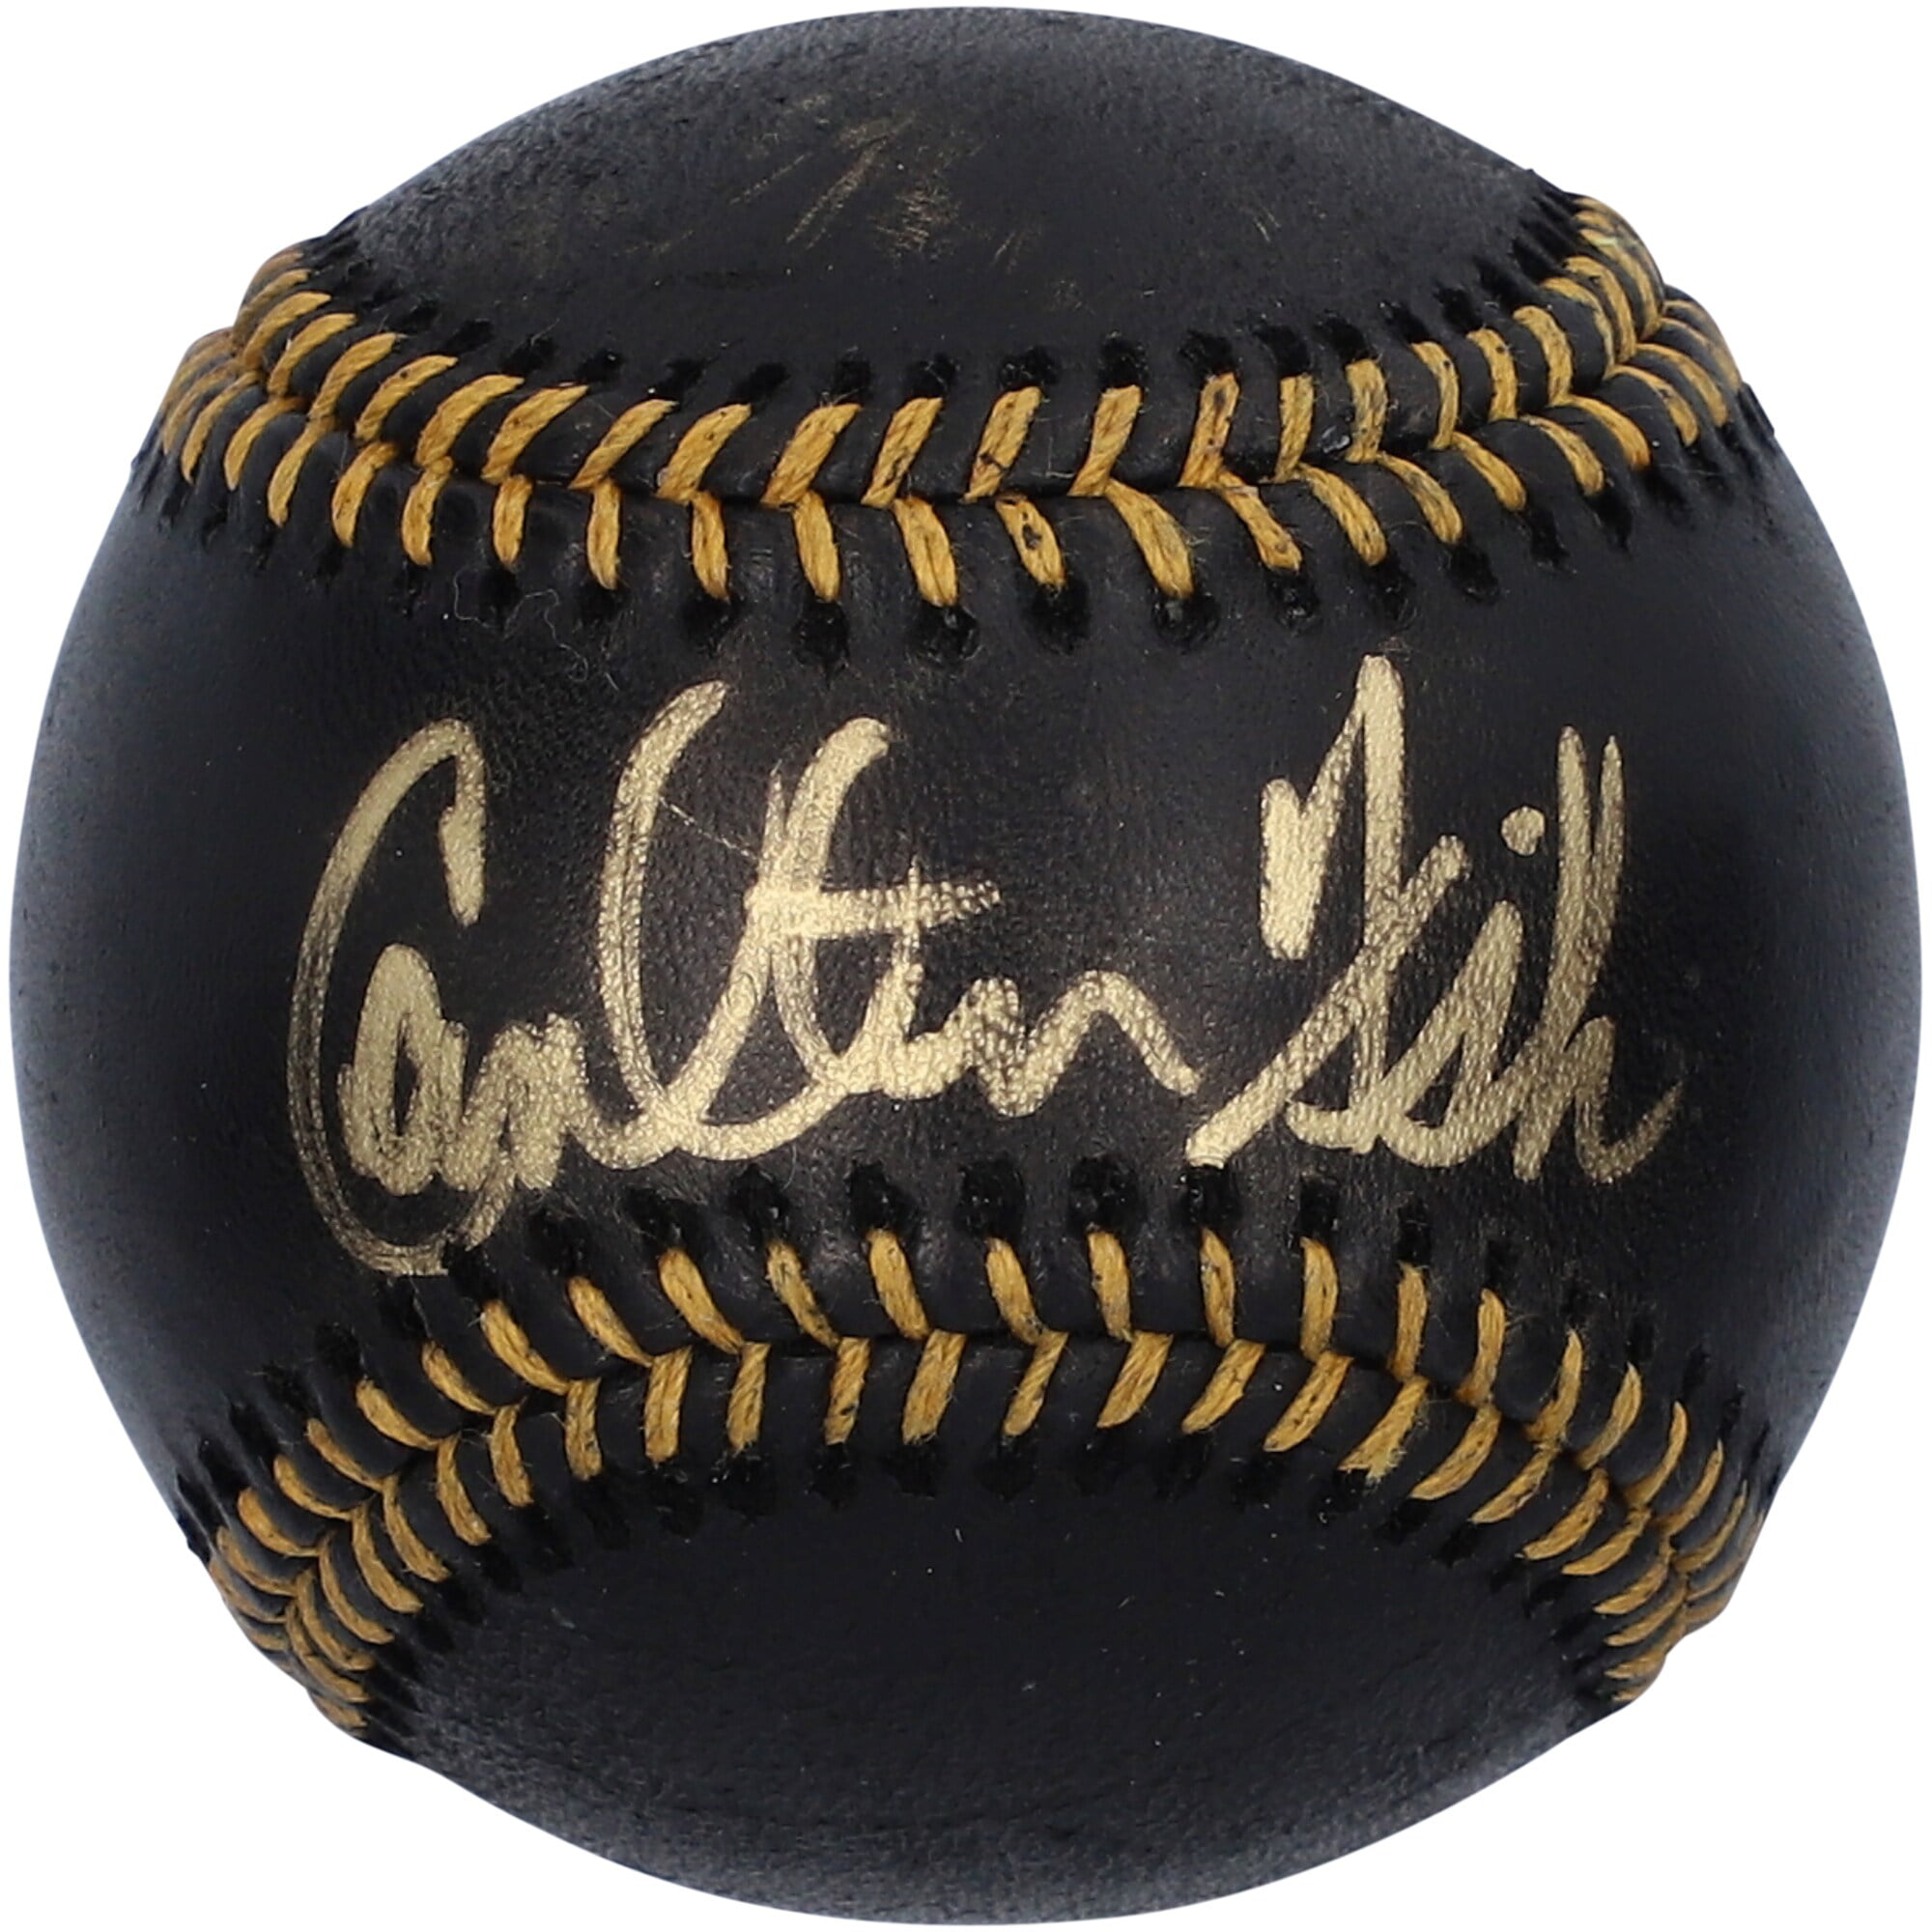 Jim Rice Autographed Boston Red Sox Full Size Souvenir Baseball